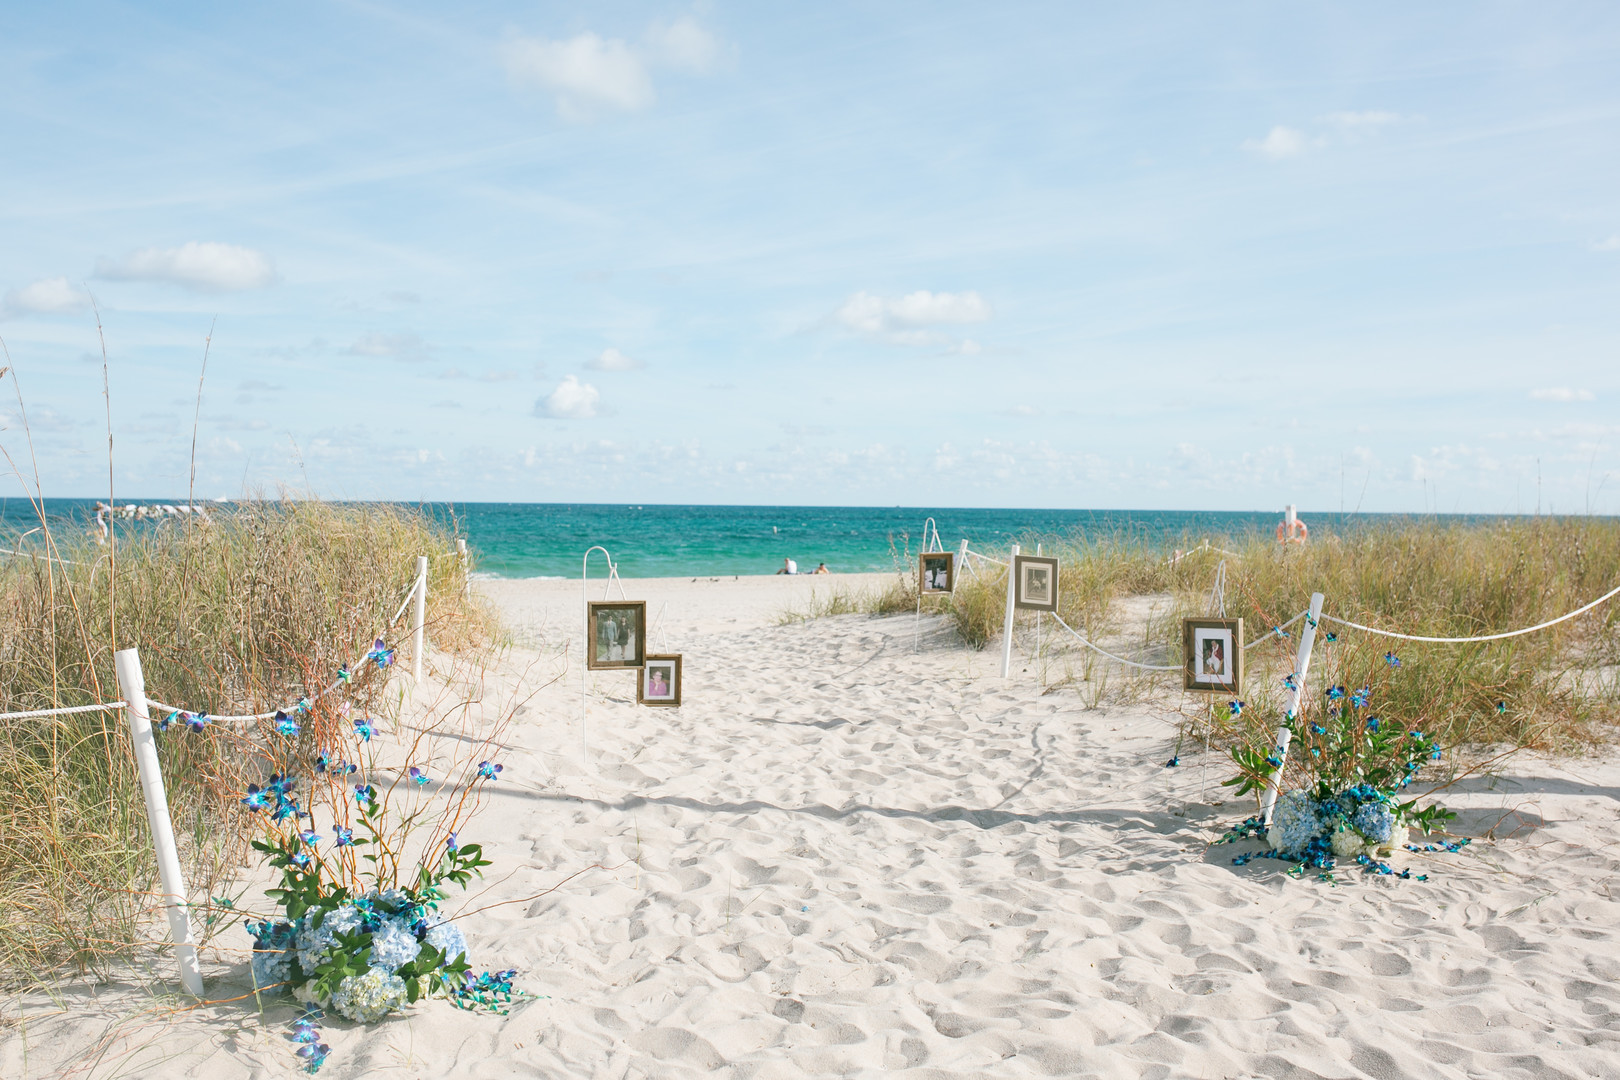 Romantic beach wedding in Fort Lauderdale, Florida two brides lesbian wedding